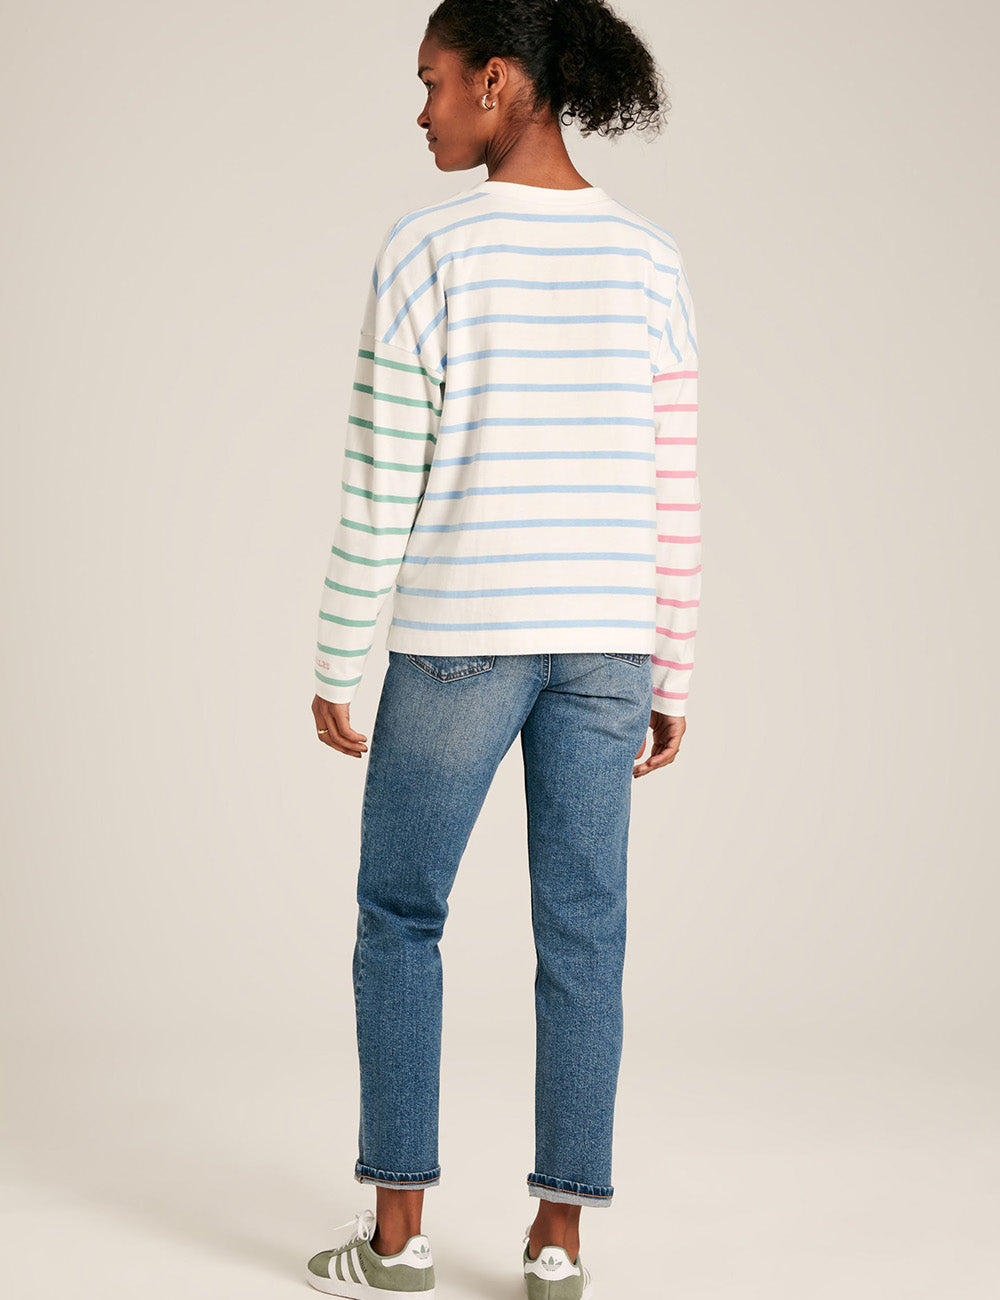 Joules Ellie T-Shirt - Blue/Cream Stripe